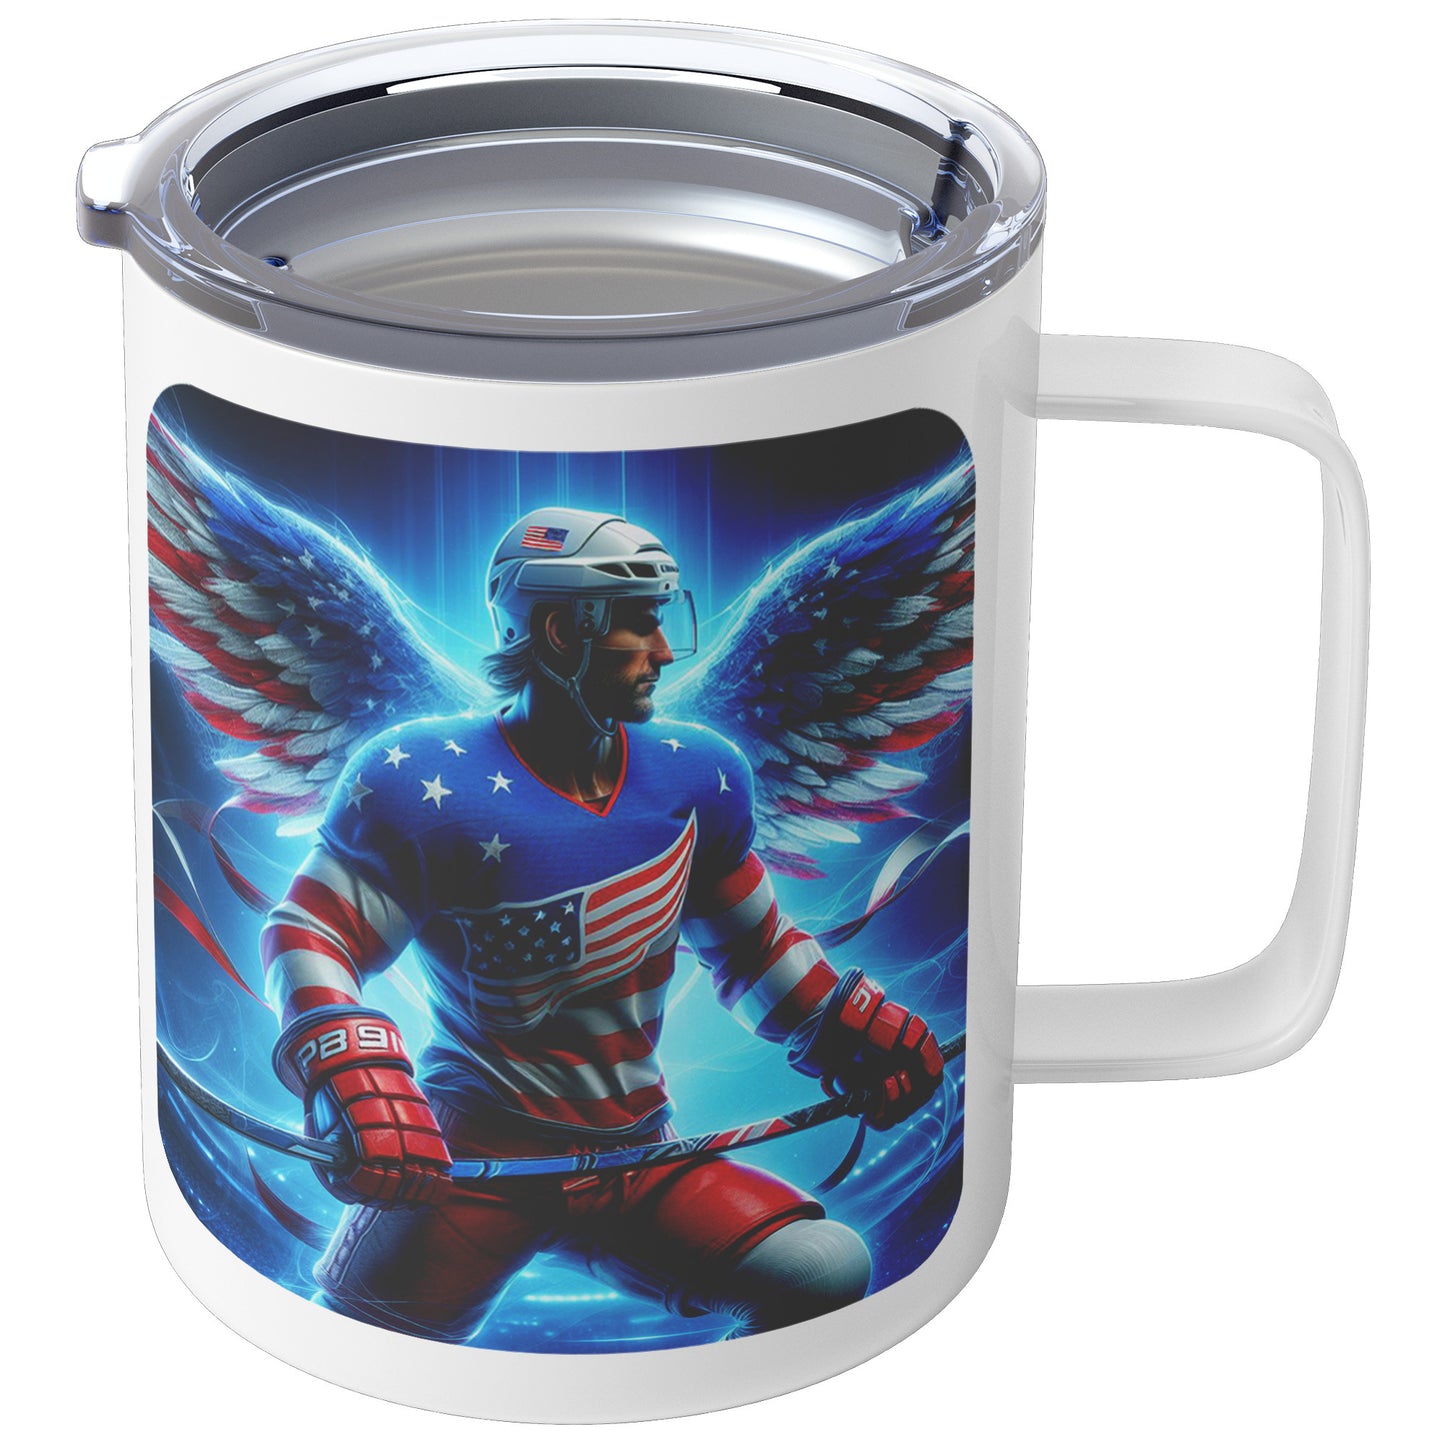 Man Ice Hockey Player - Coffee Mug #20